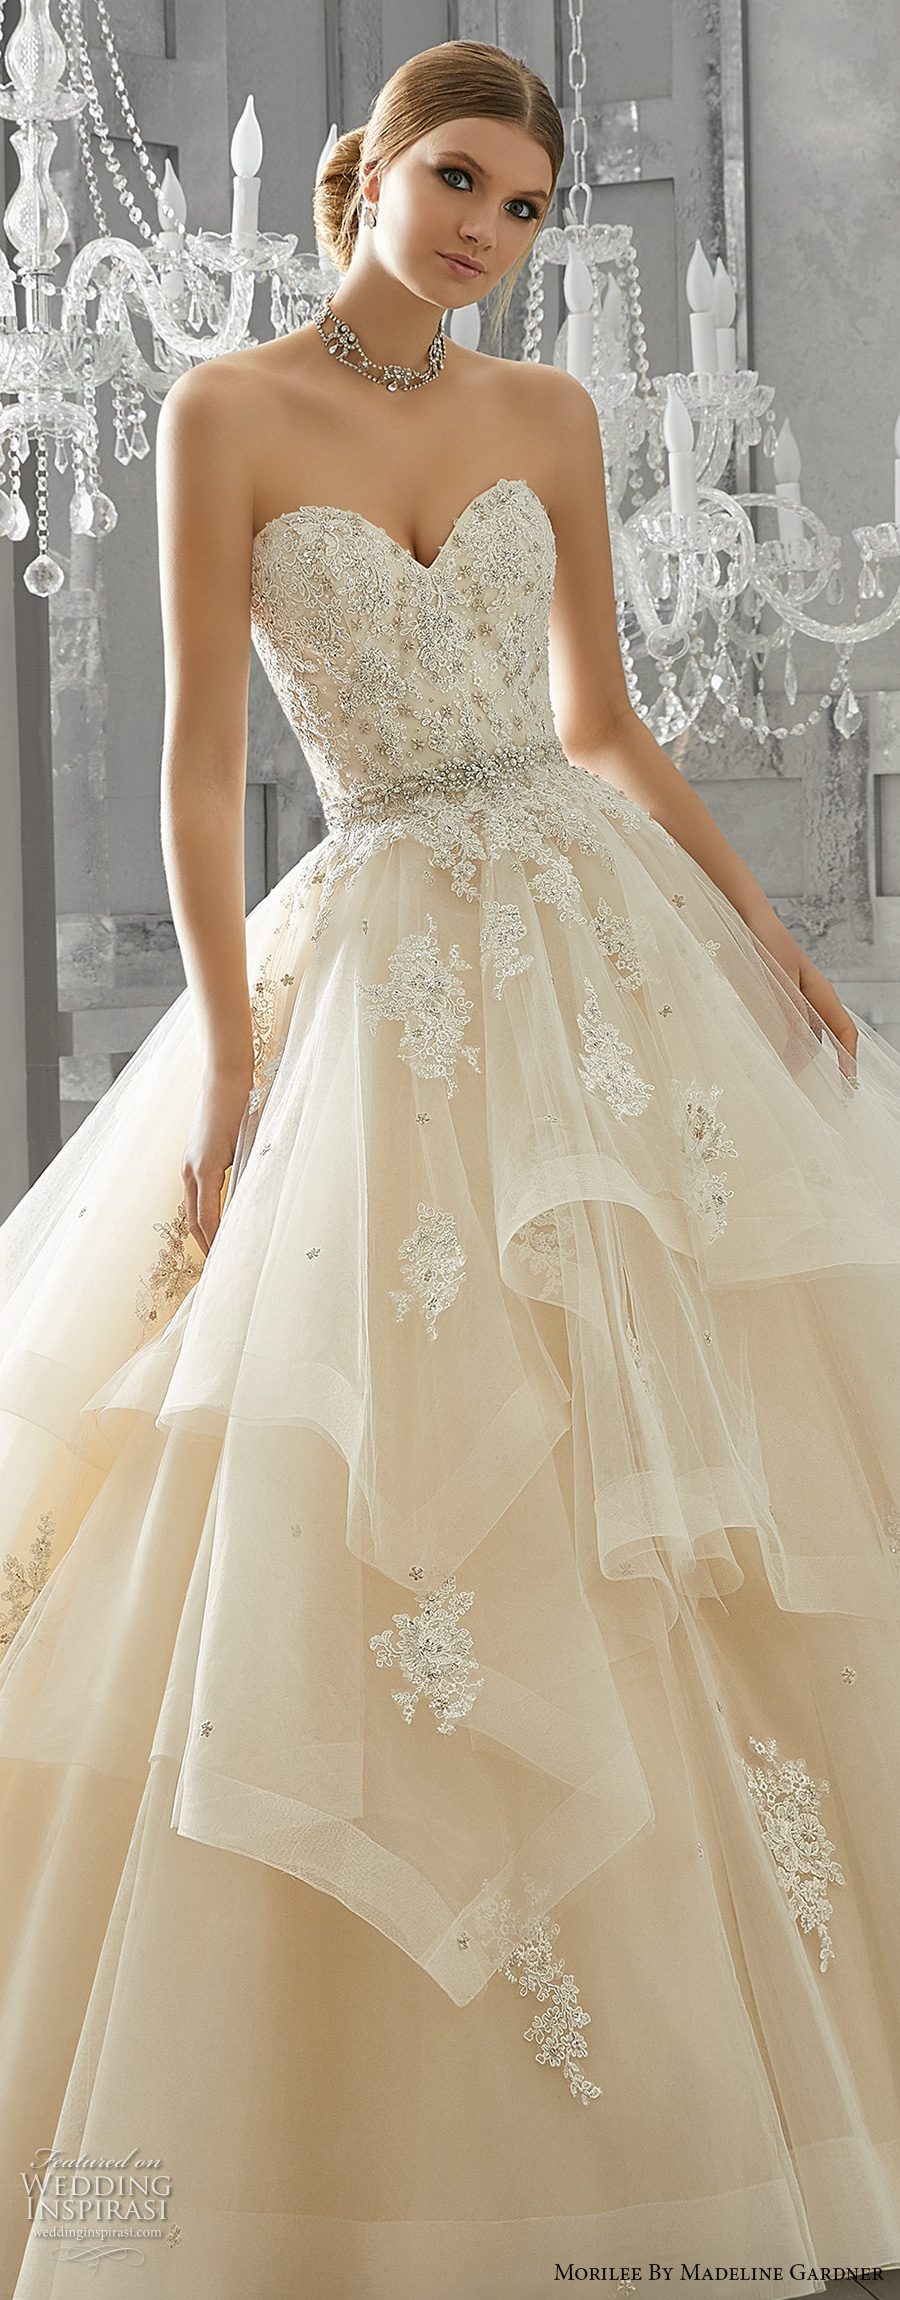 Mori Lee by Madeline Gardner Wedding Dress 2691 on SALE, Up to 80% OFF